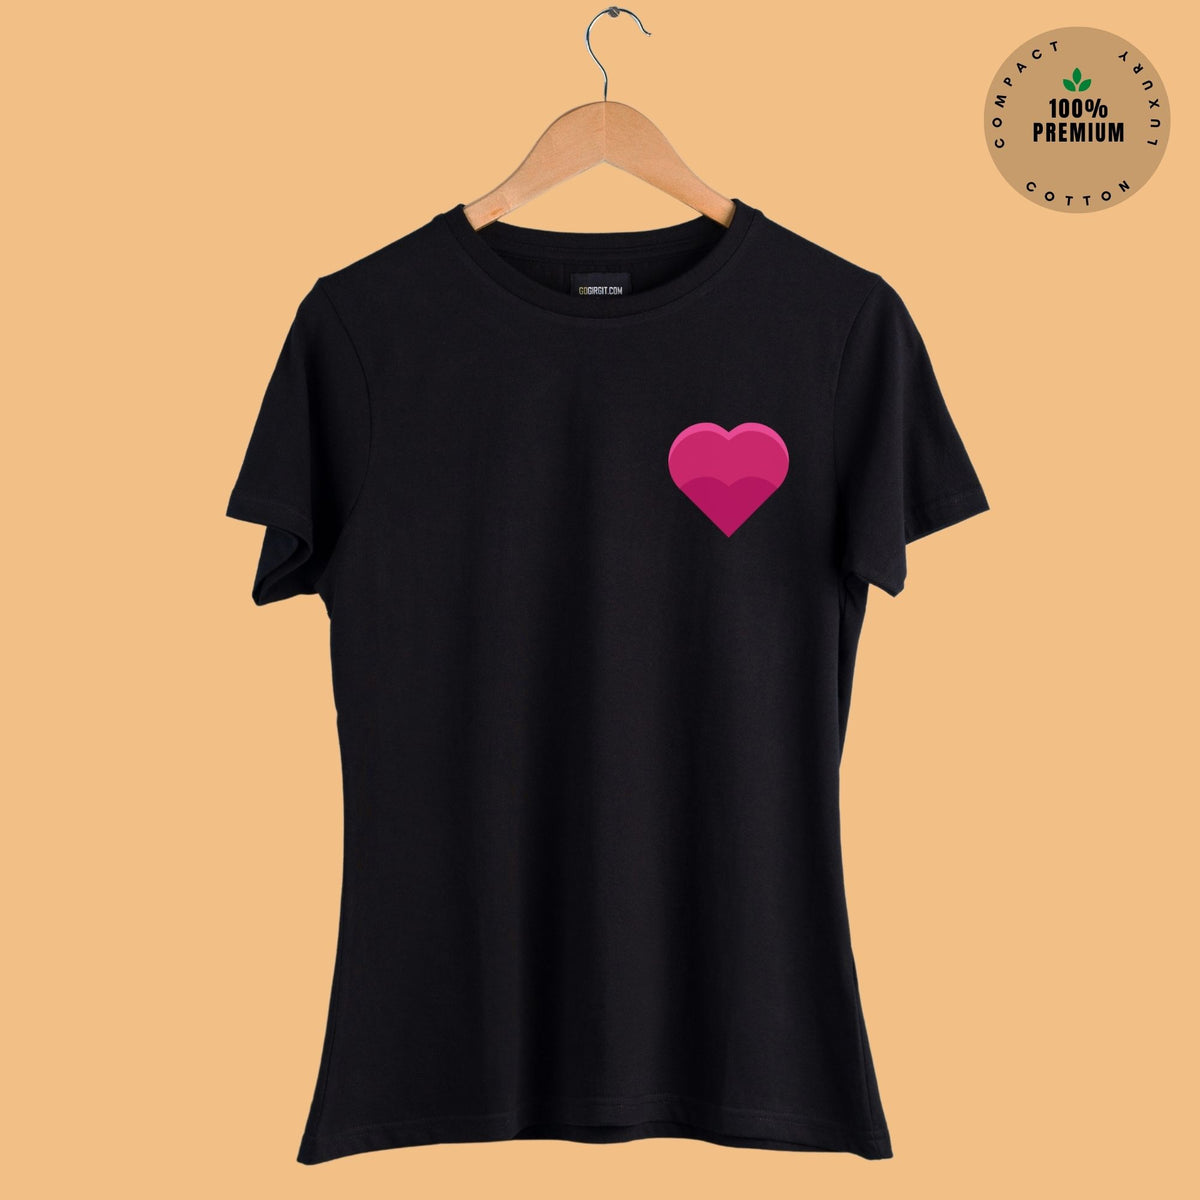 Printed-premium-cotton-women-s-round-neck-pocket-heart-black-half-sleeve-t-shirt-gogirgit